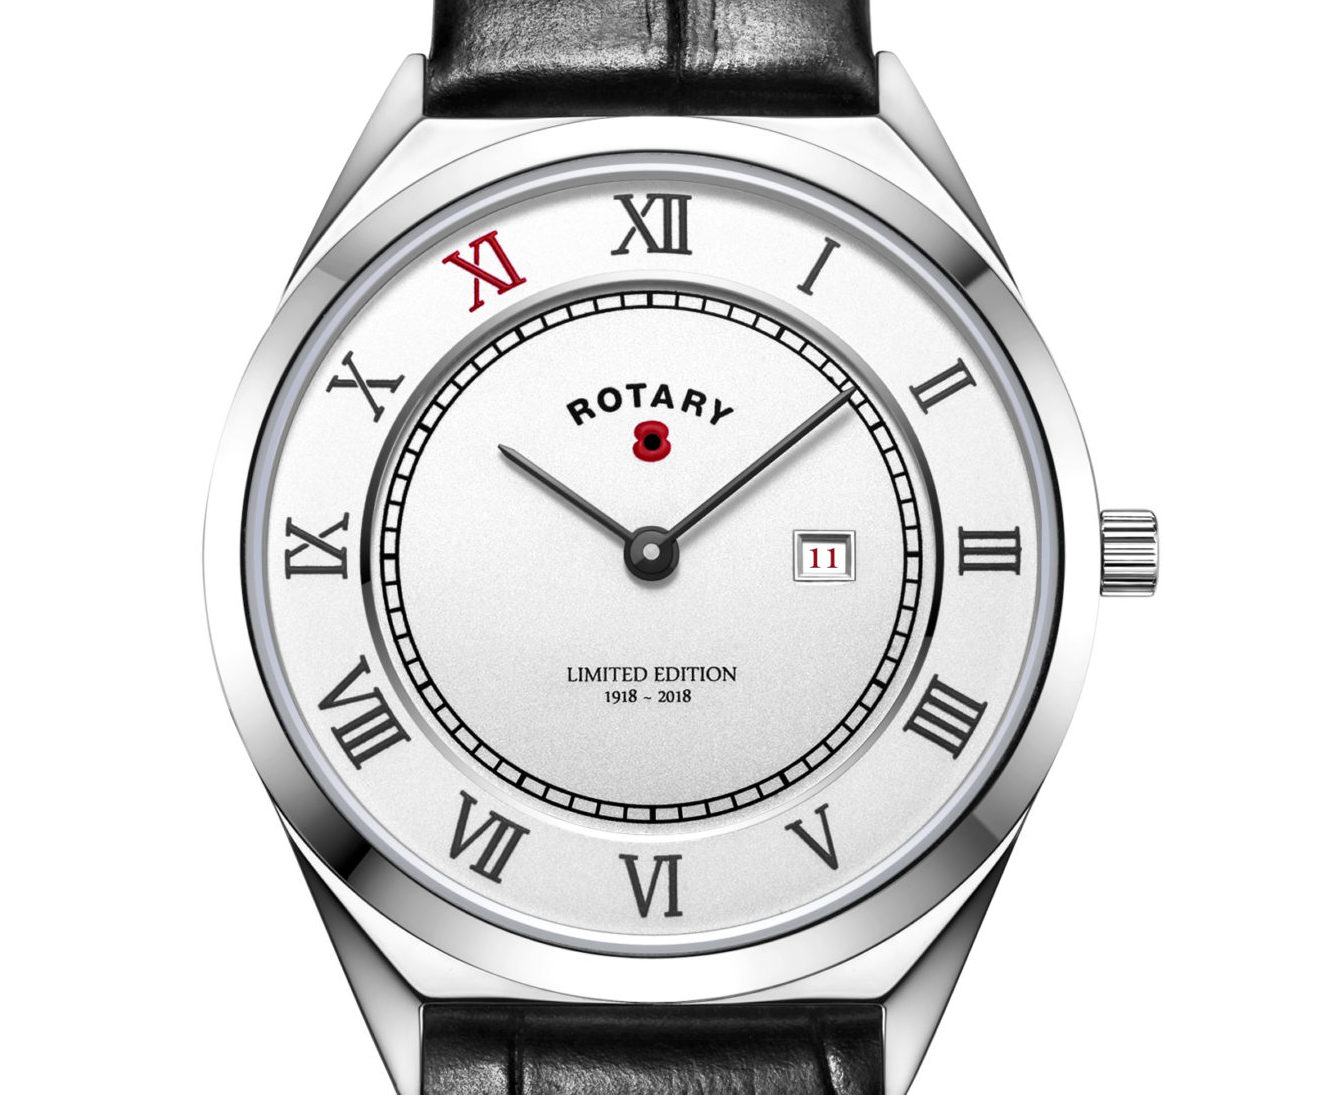 Fww limited edition centenary watch 2 e1537172412460